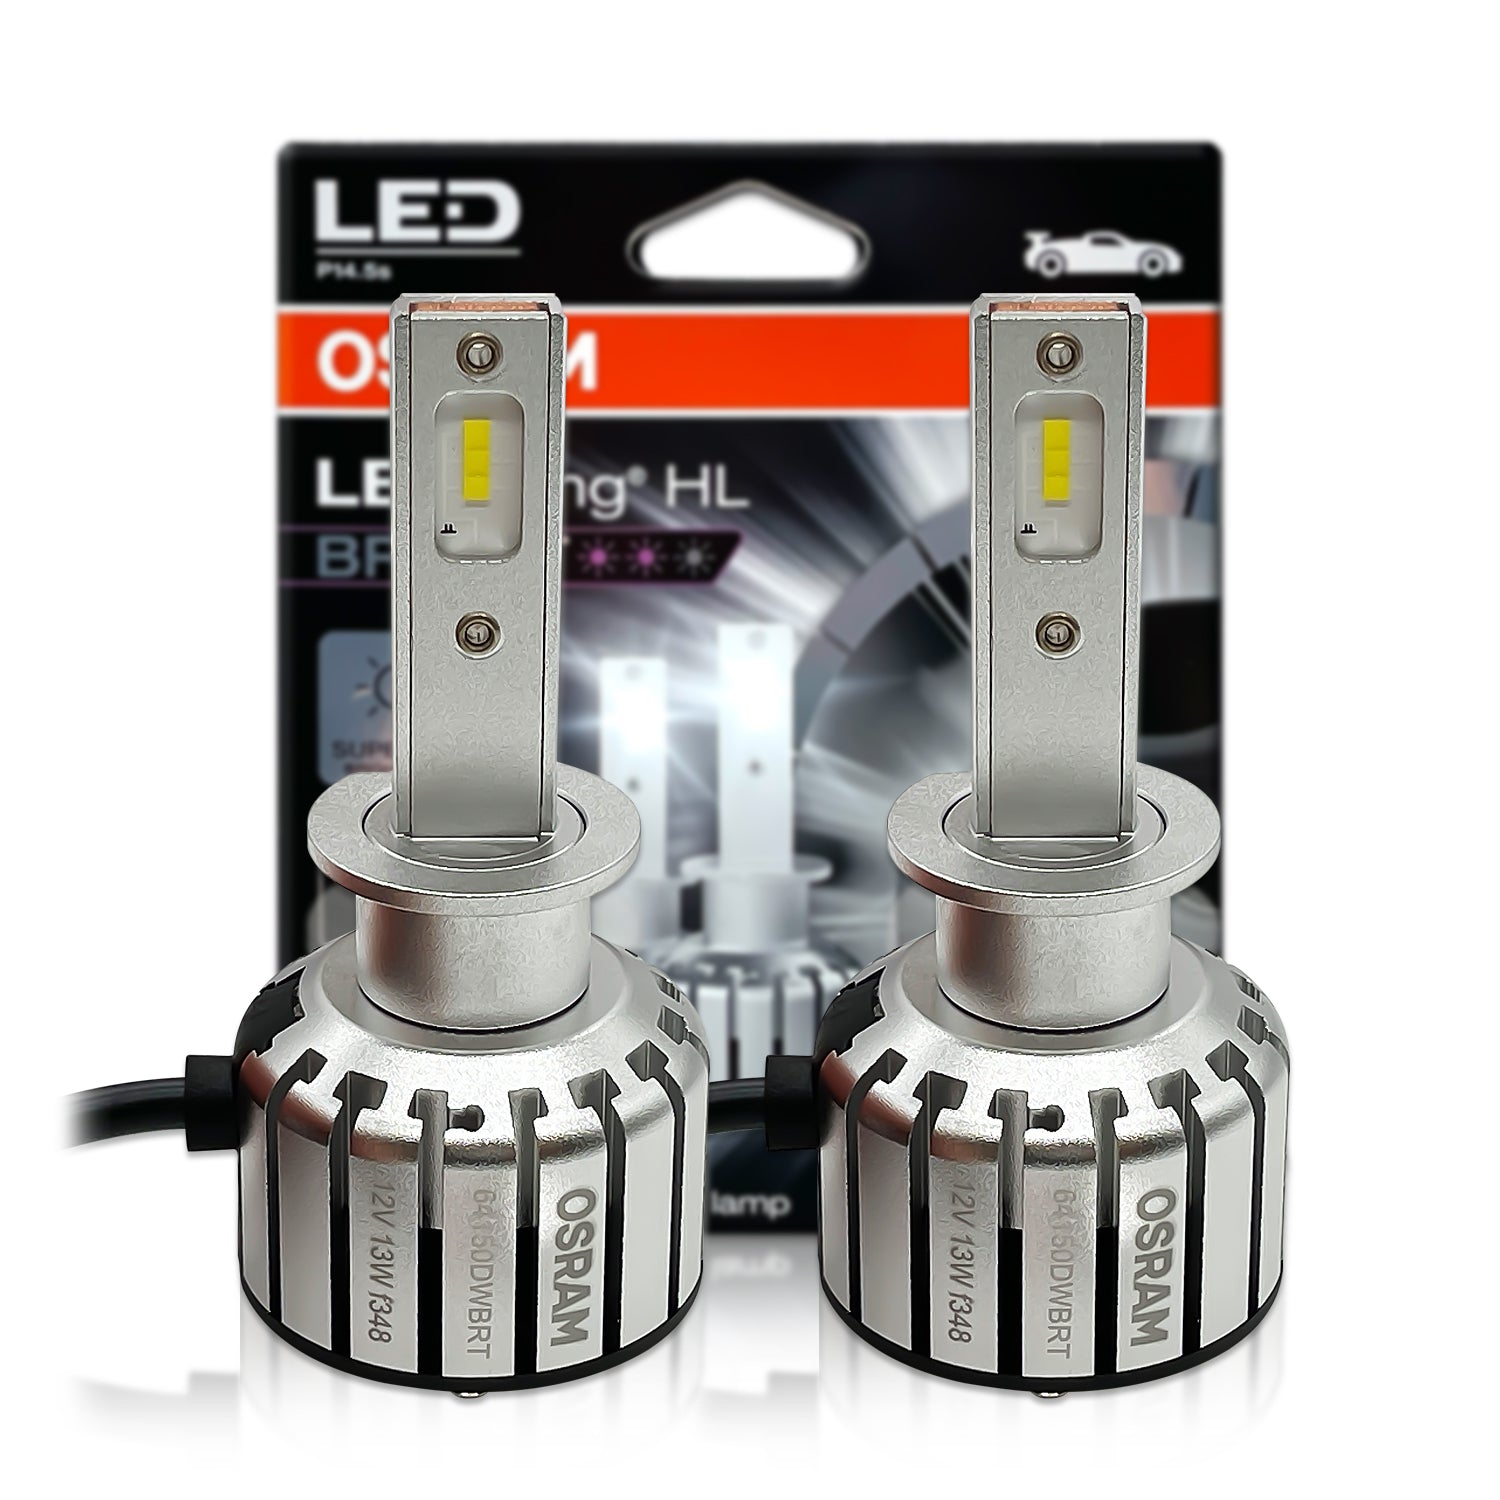 Bombillas LED H1 12V LedDriving HL Bright Osram